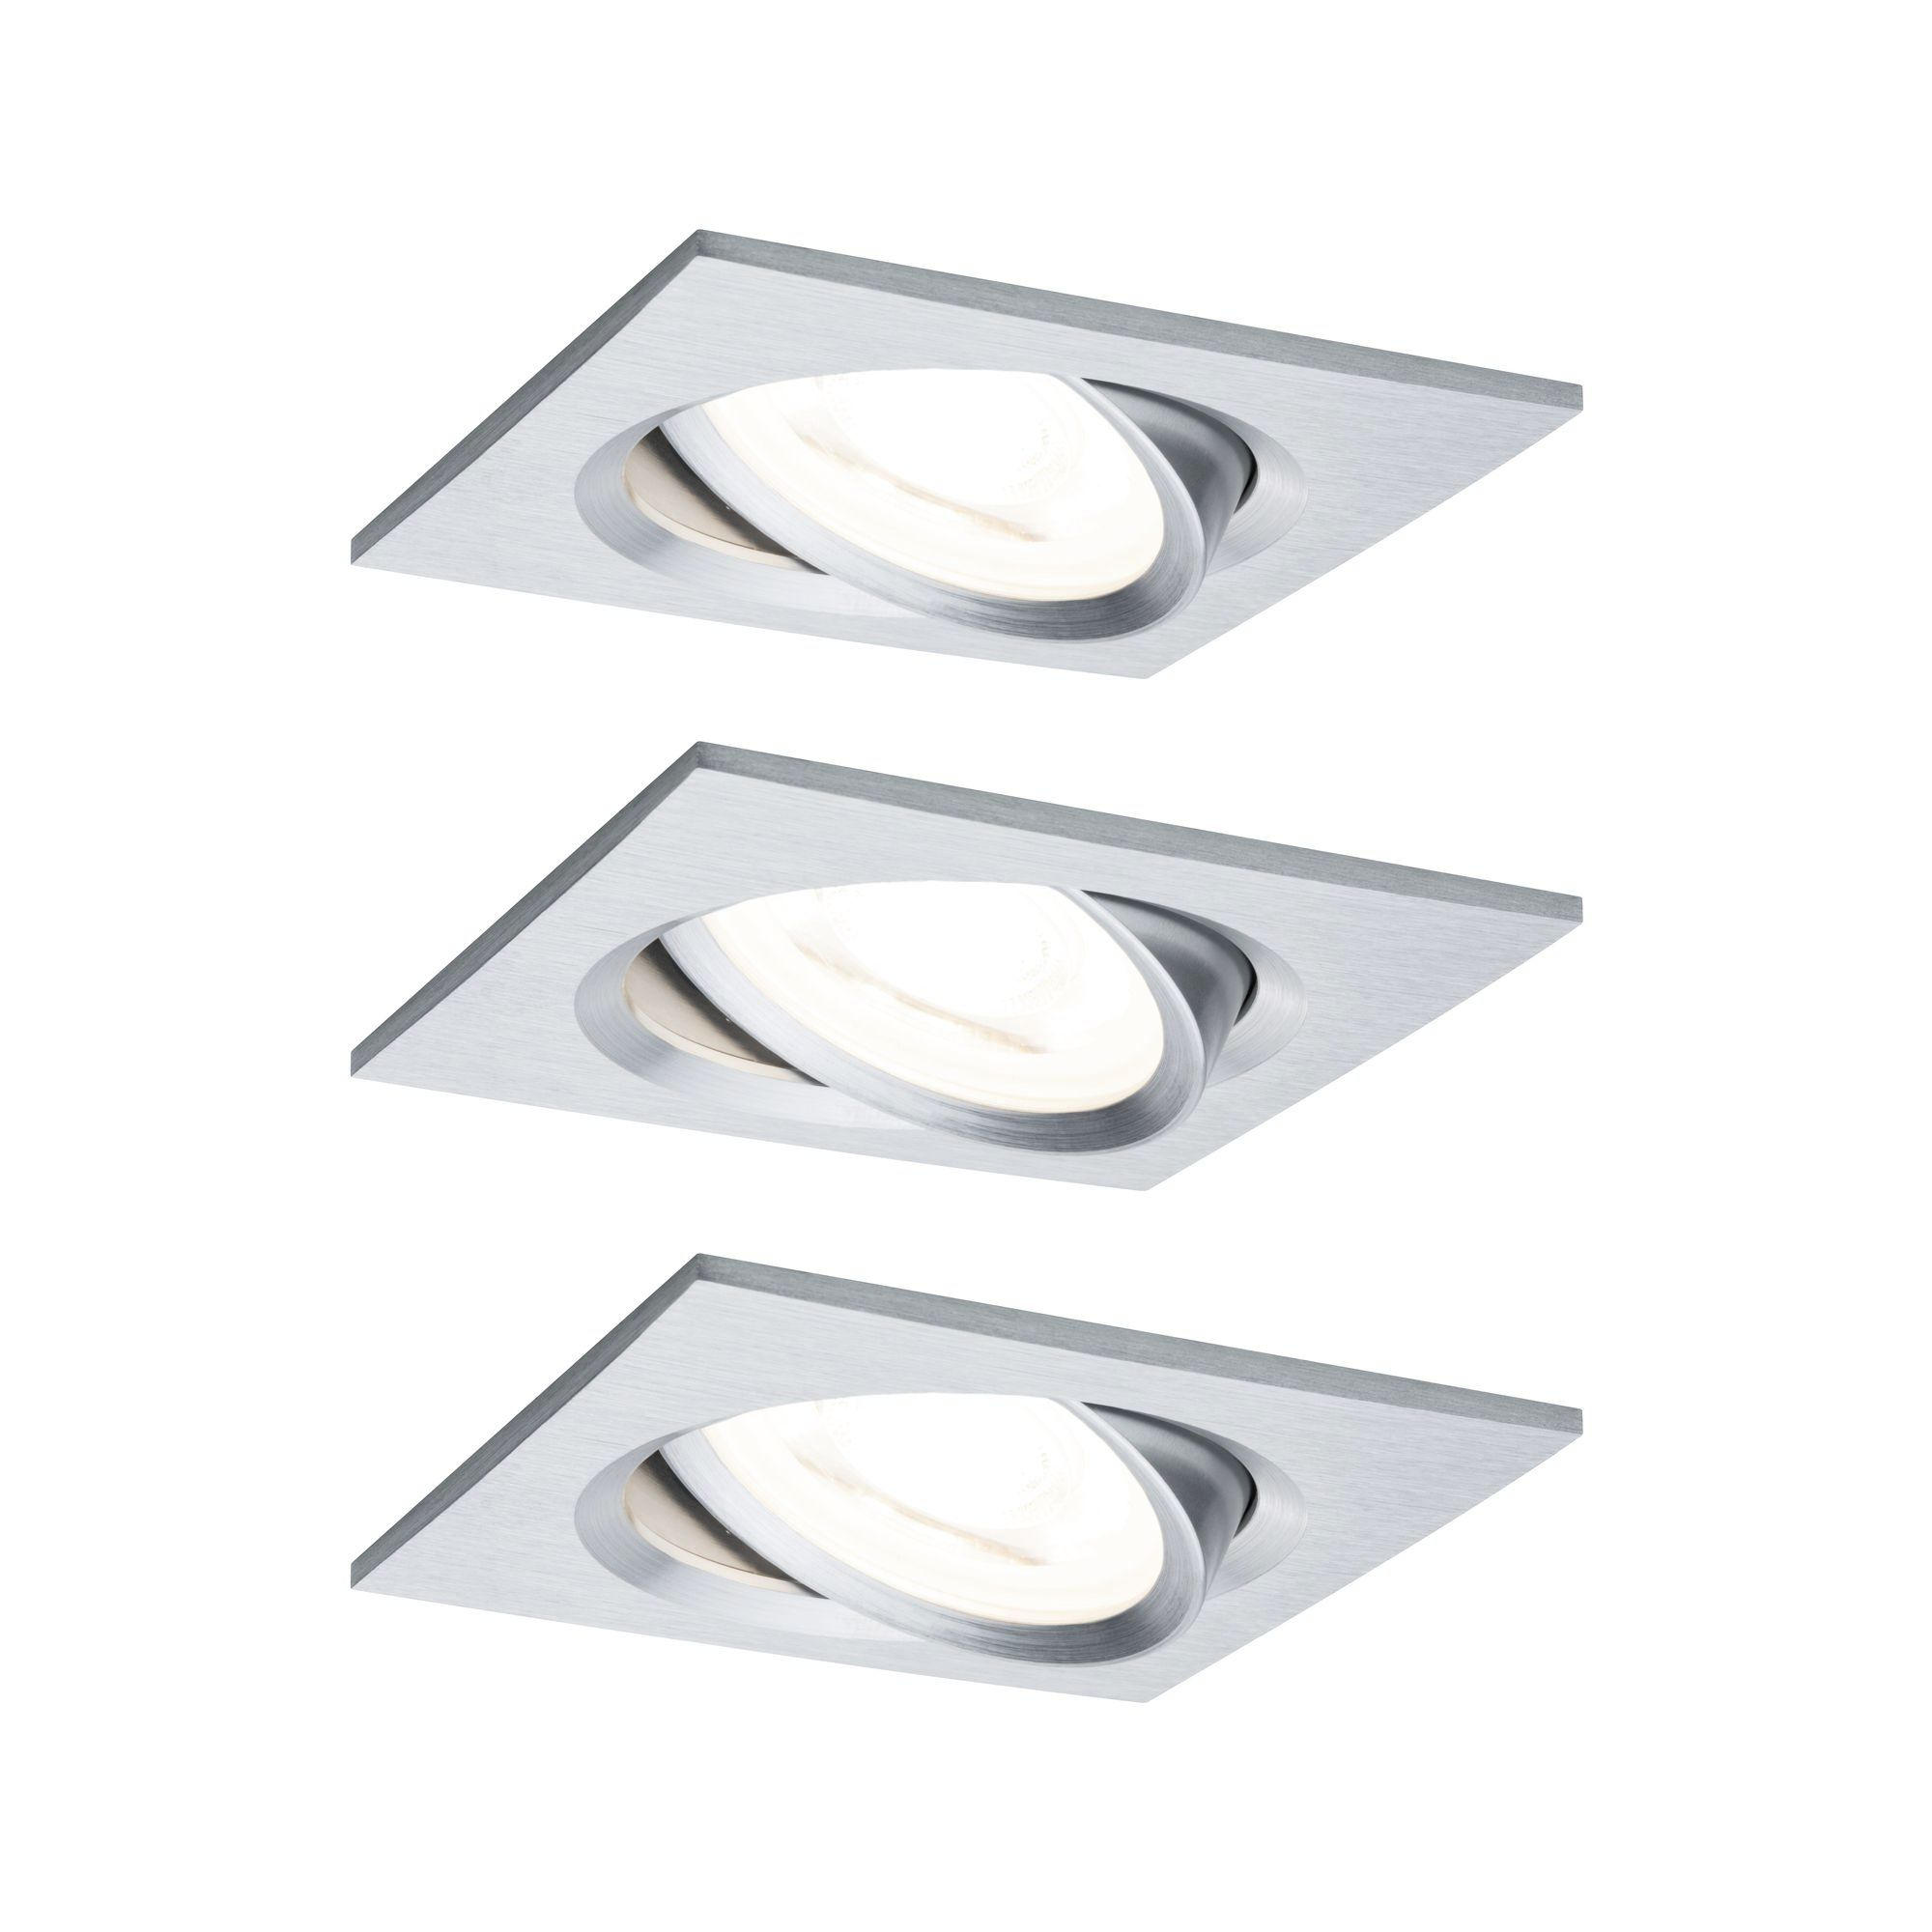 LED-DECKENLEUCHTE 8,4/8,4 cm   - Alufarben, Basics, Metall (8,4/8,4cm) - Paulmann